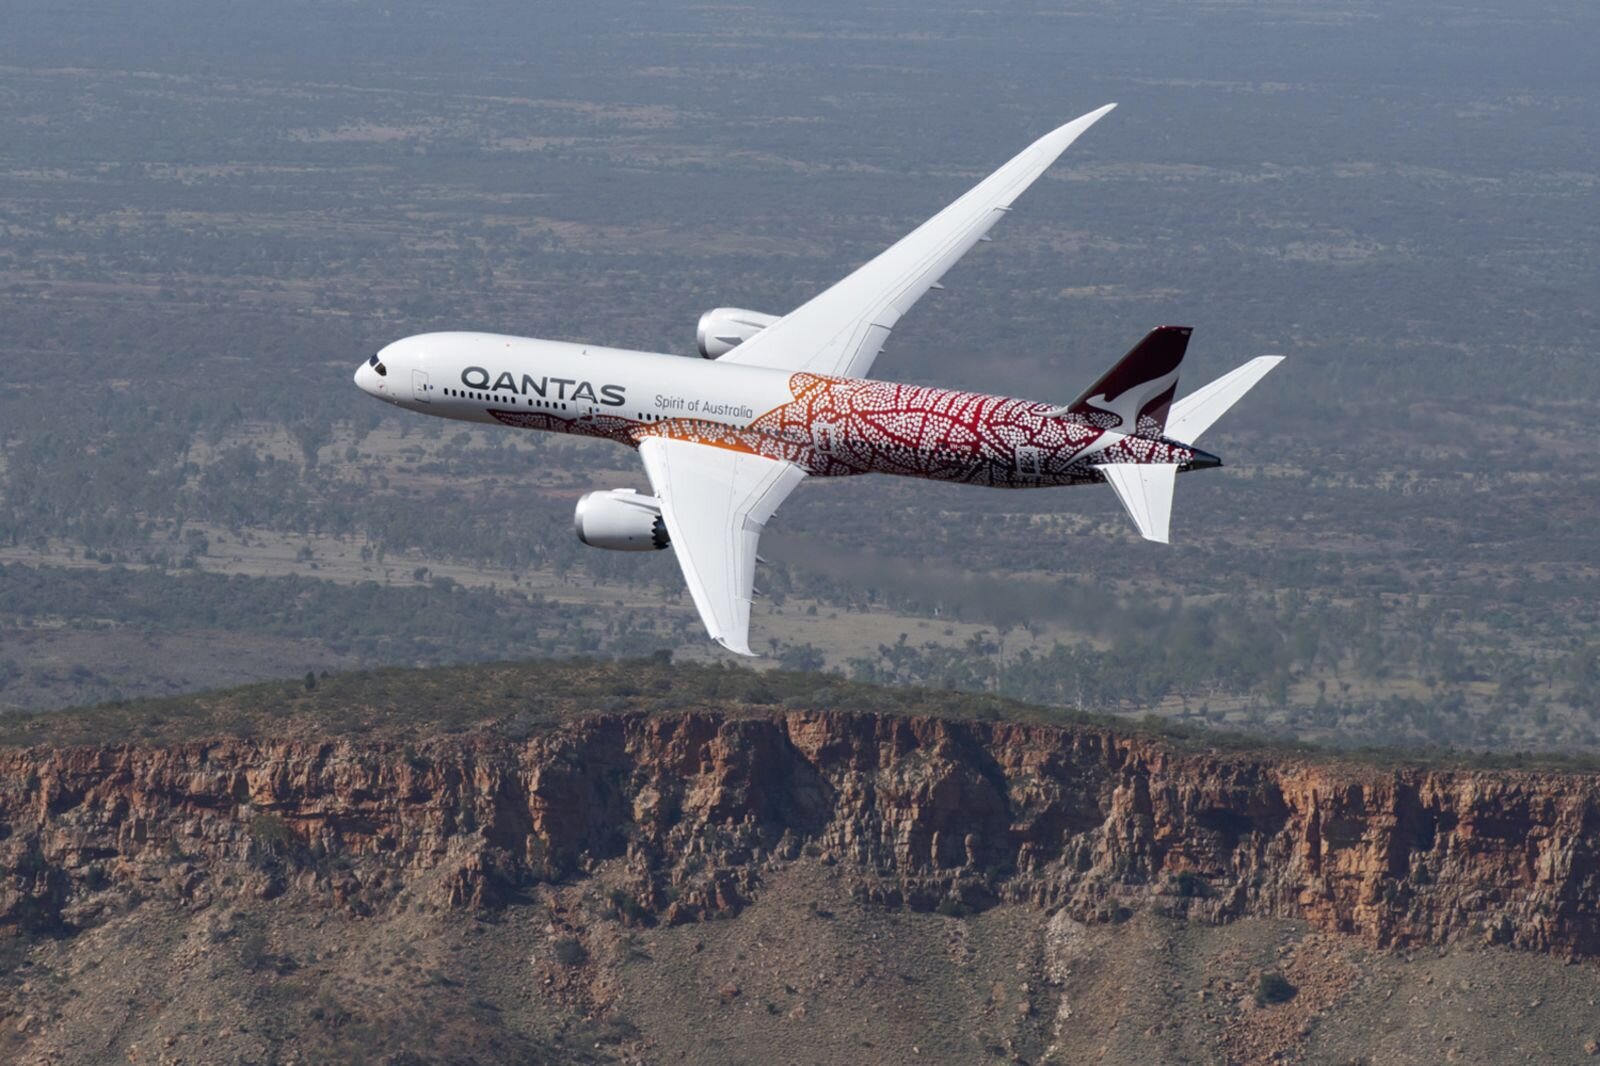 Qantas' Historic 20 Hour Flight